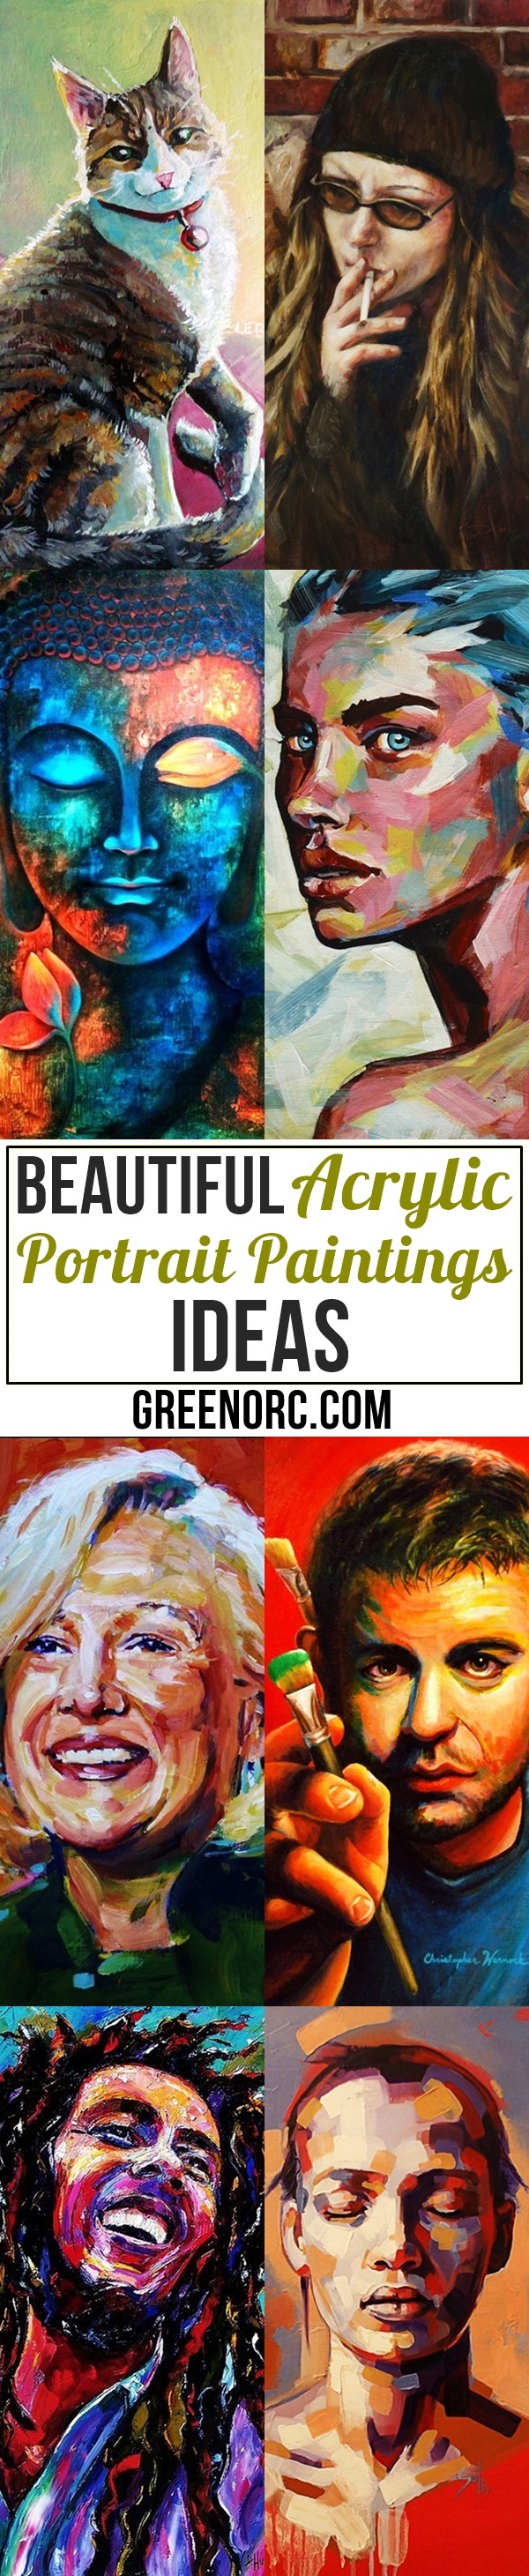 Beautiful Acrylic Portrait Paintings Ideas